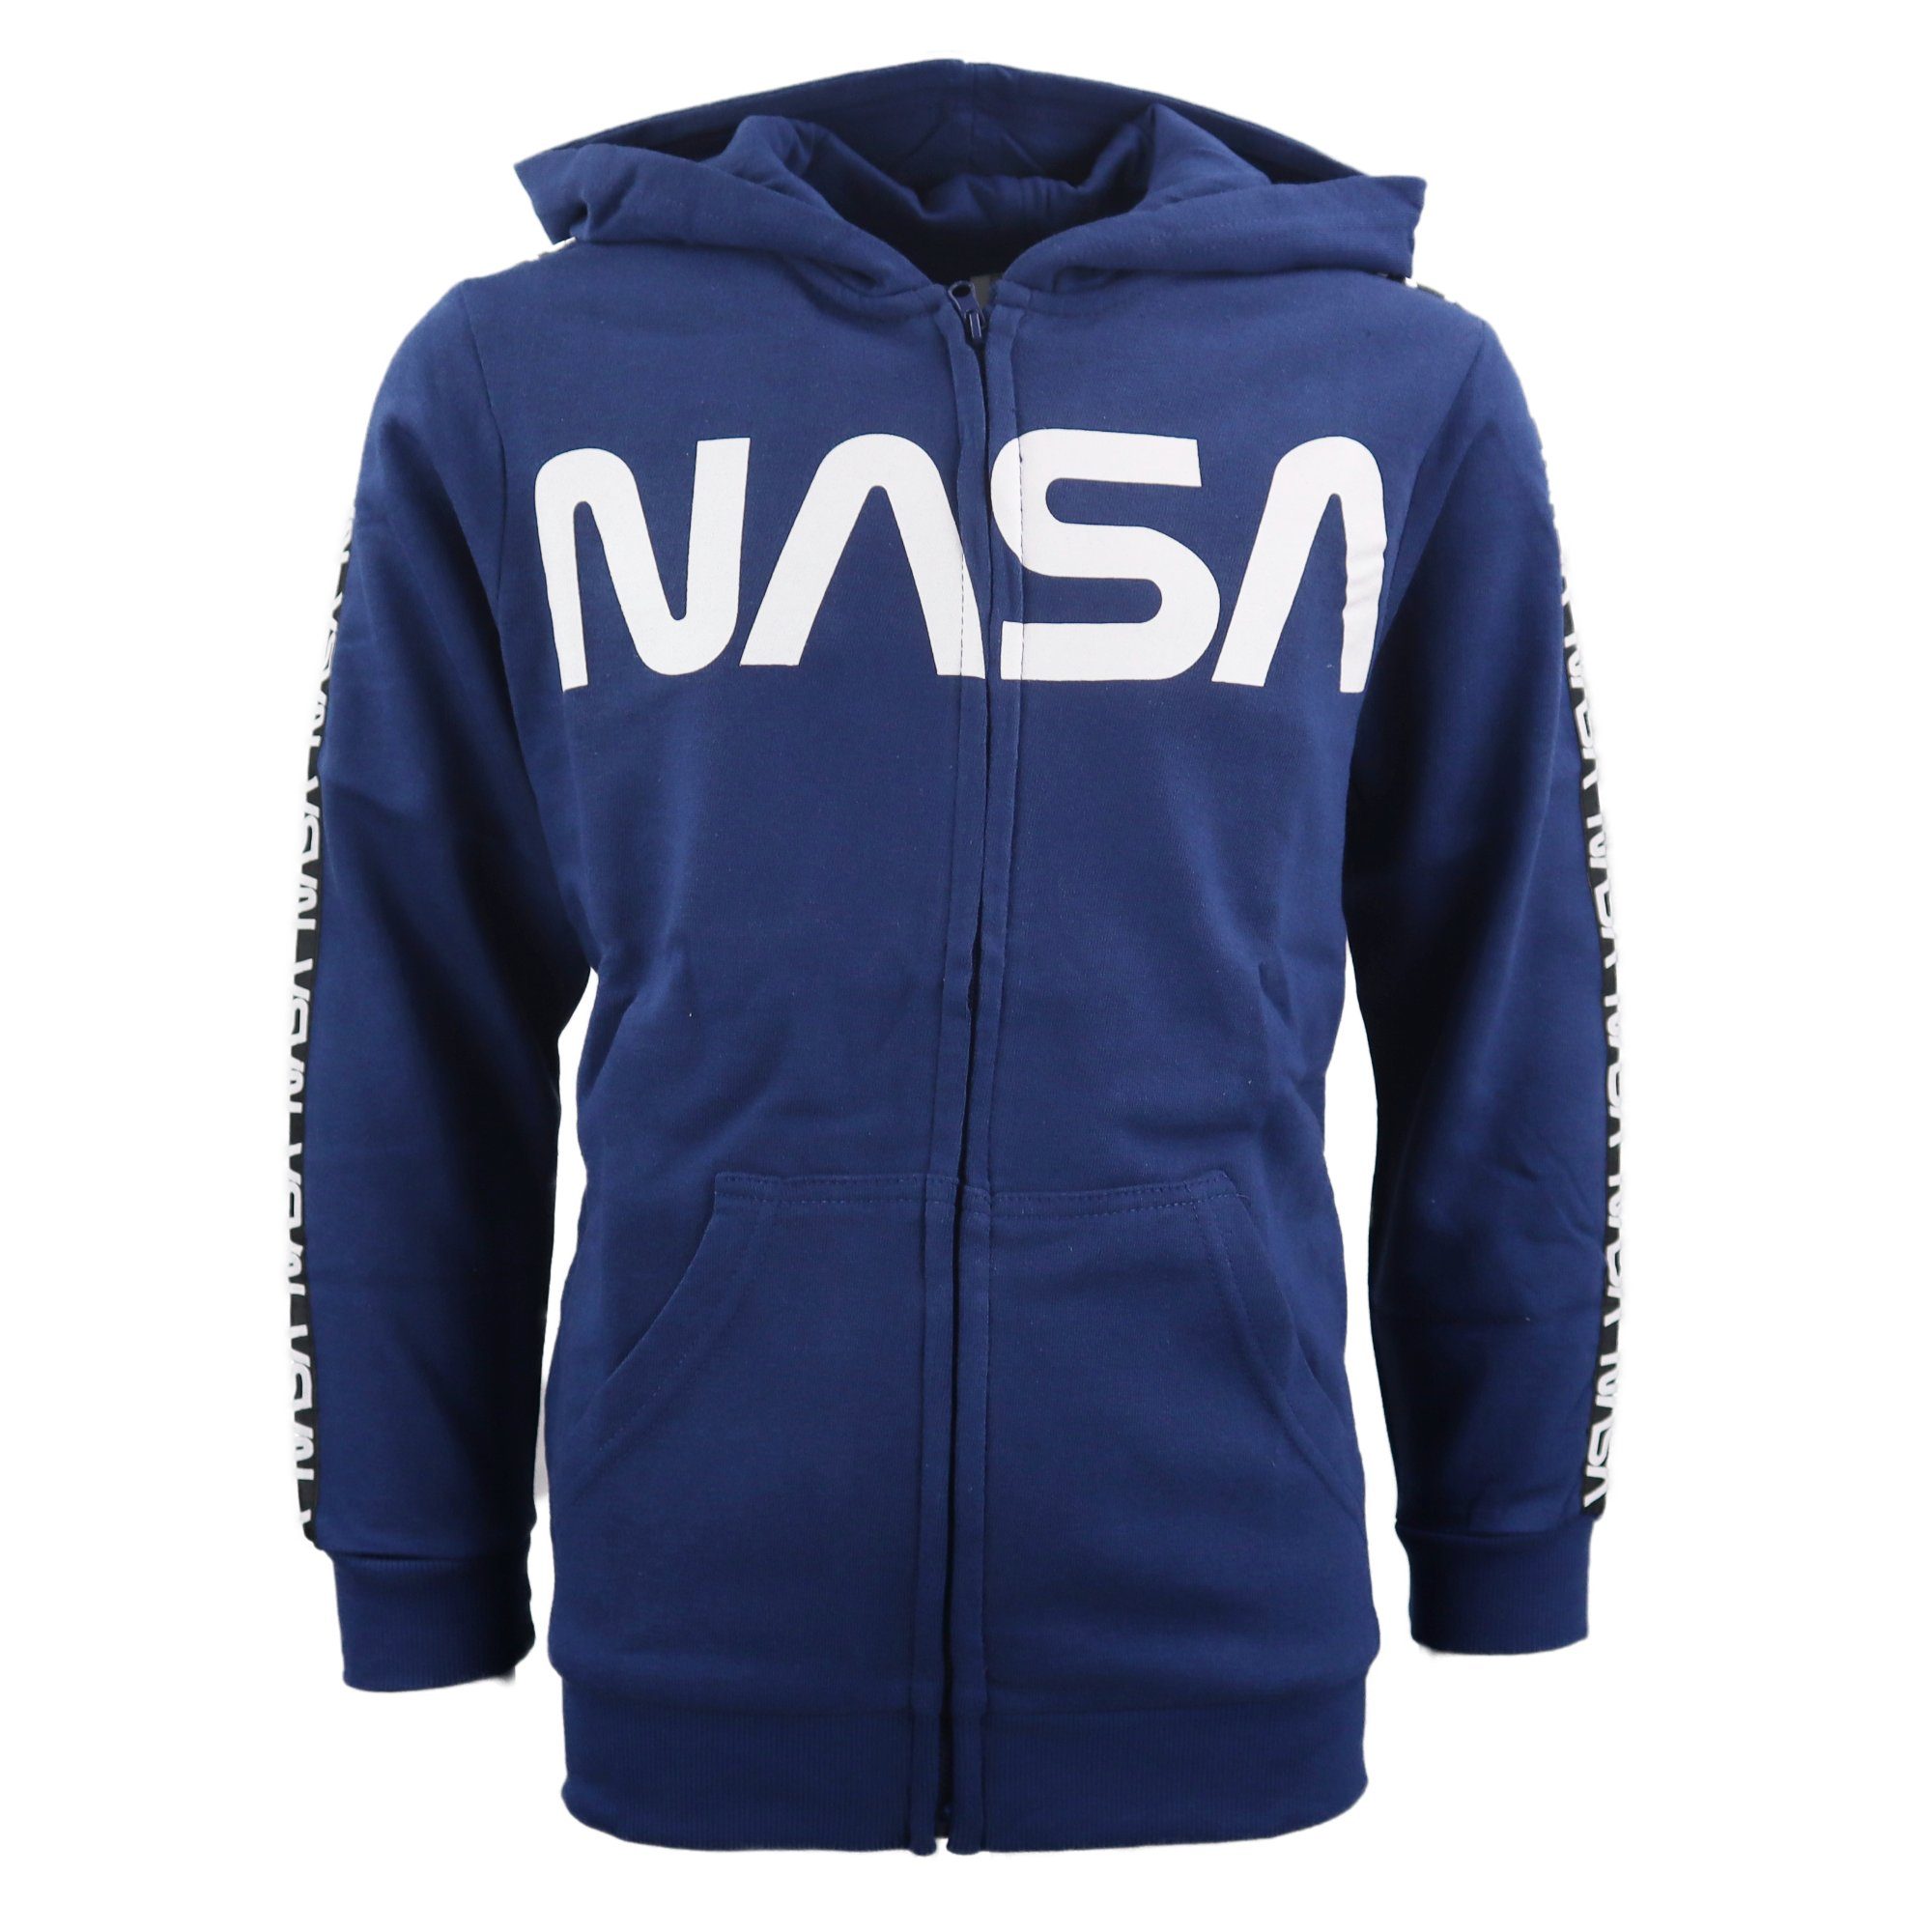 NASA Hoodie NASA Jungen Jugend 164, bis 100% 134 Kapuzen Blau Gr. Pulli Kinder Baumwolle